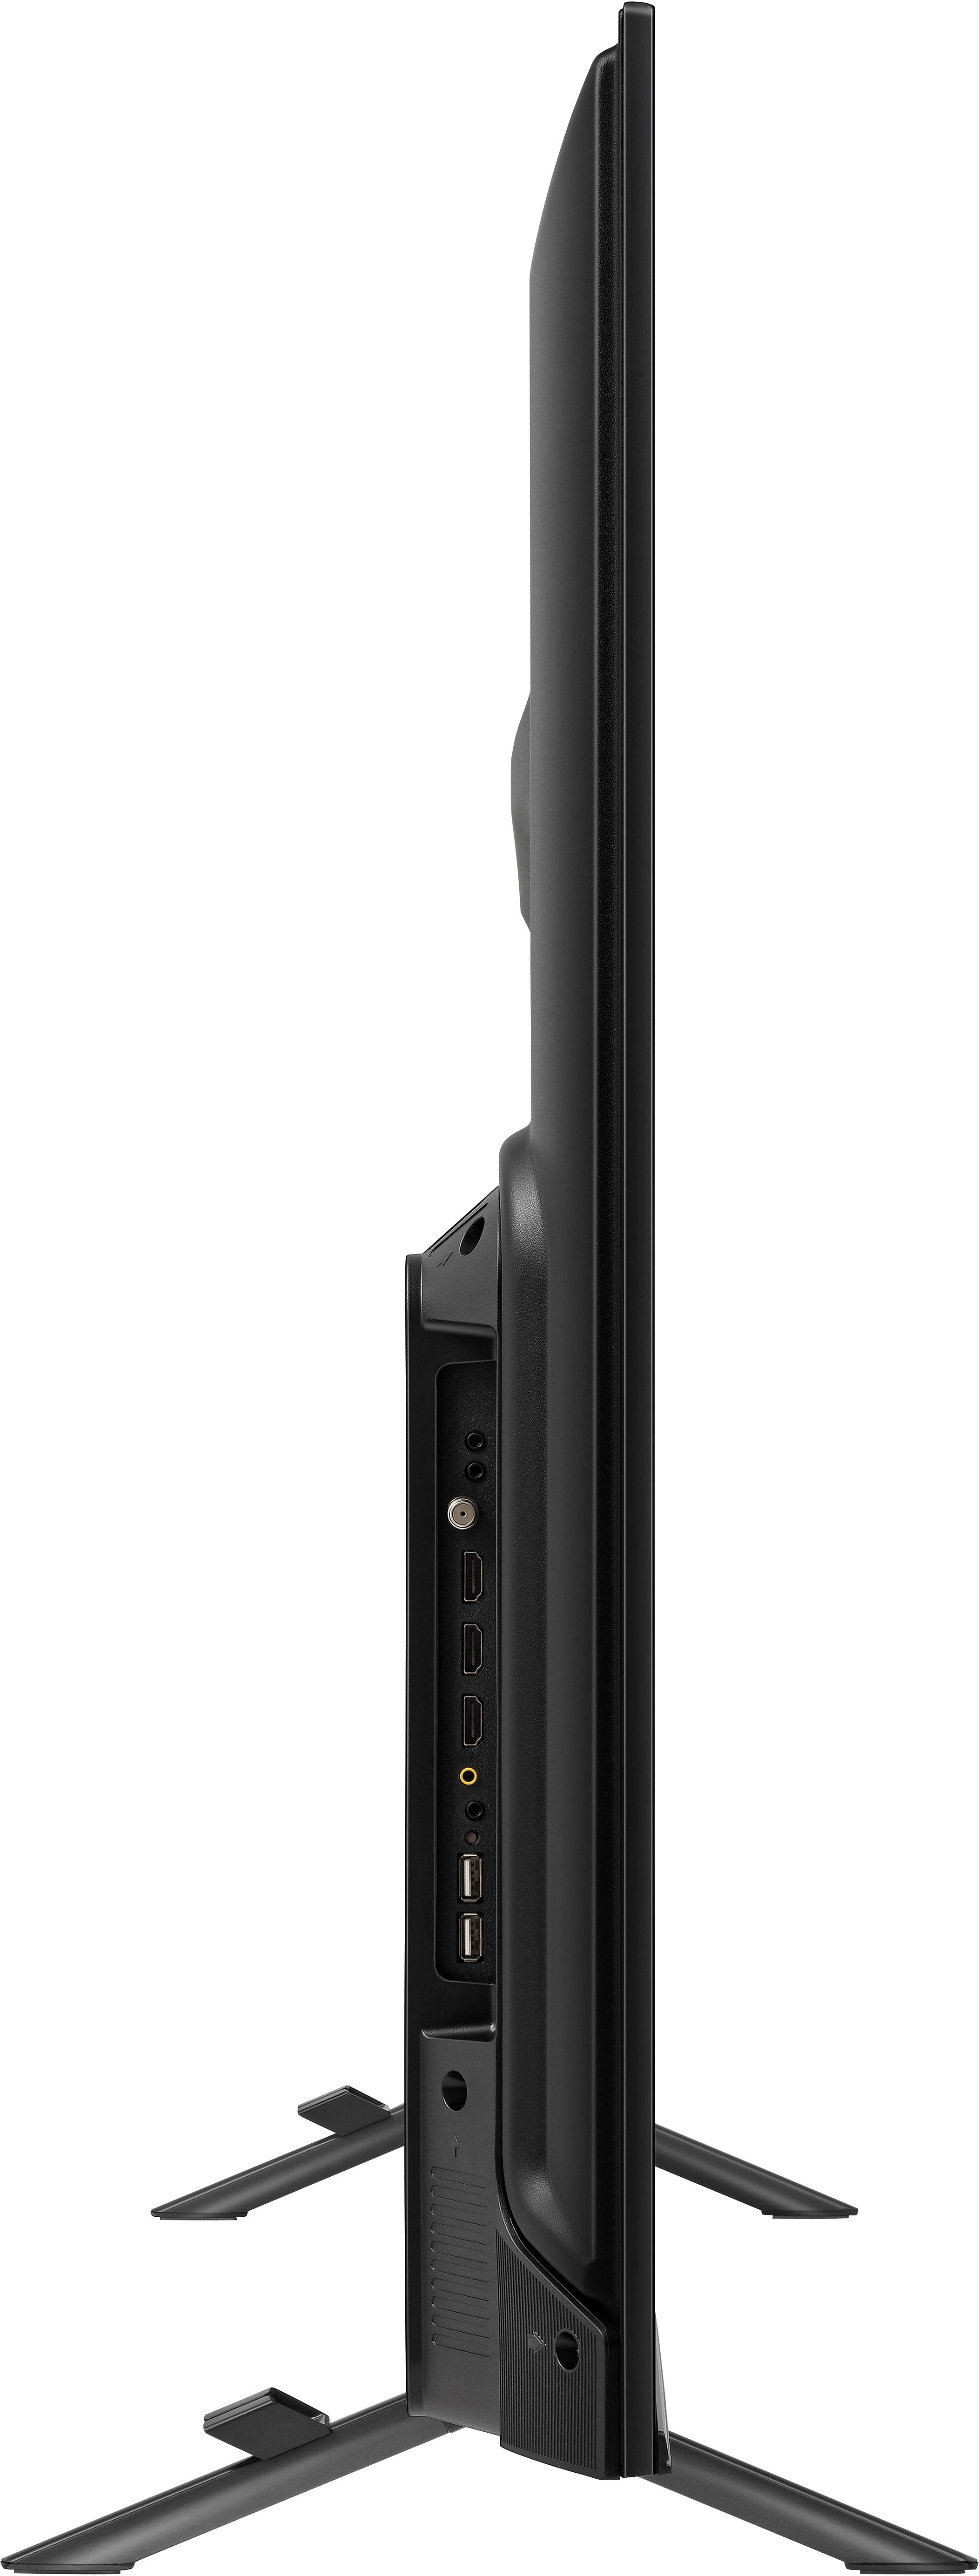 Hisense Launches Affordable U6K ULED 4K Mini LED TV Series - My Site